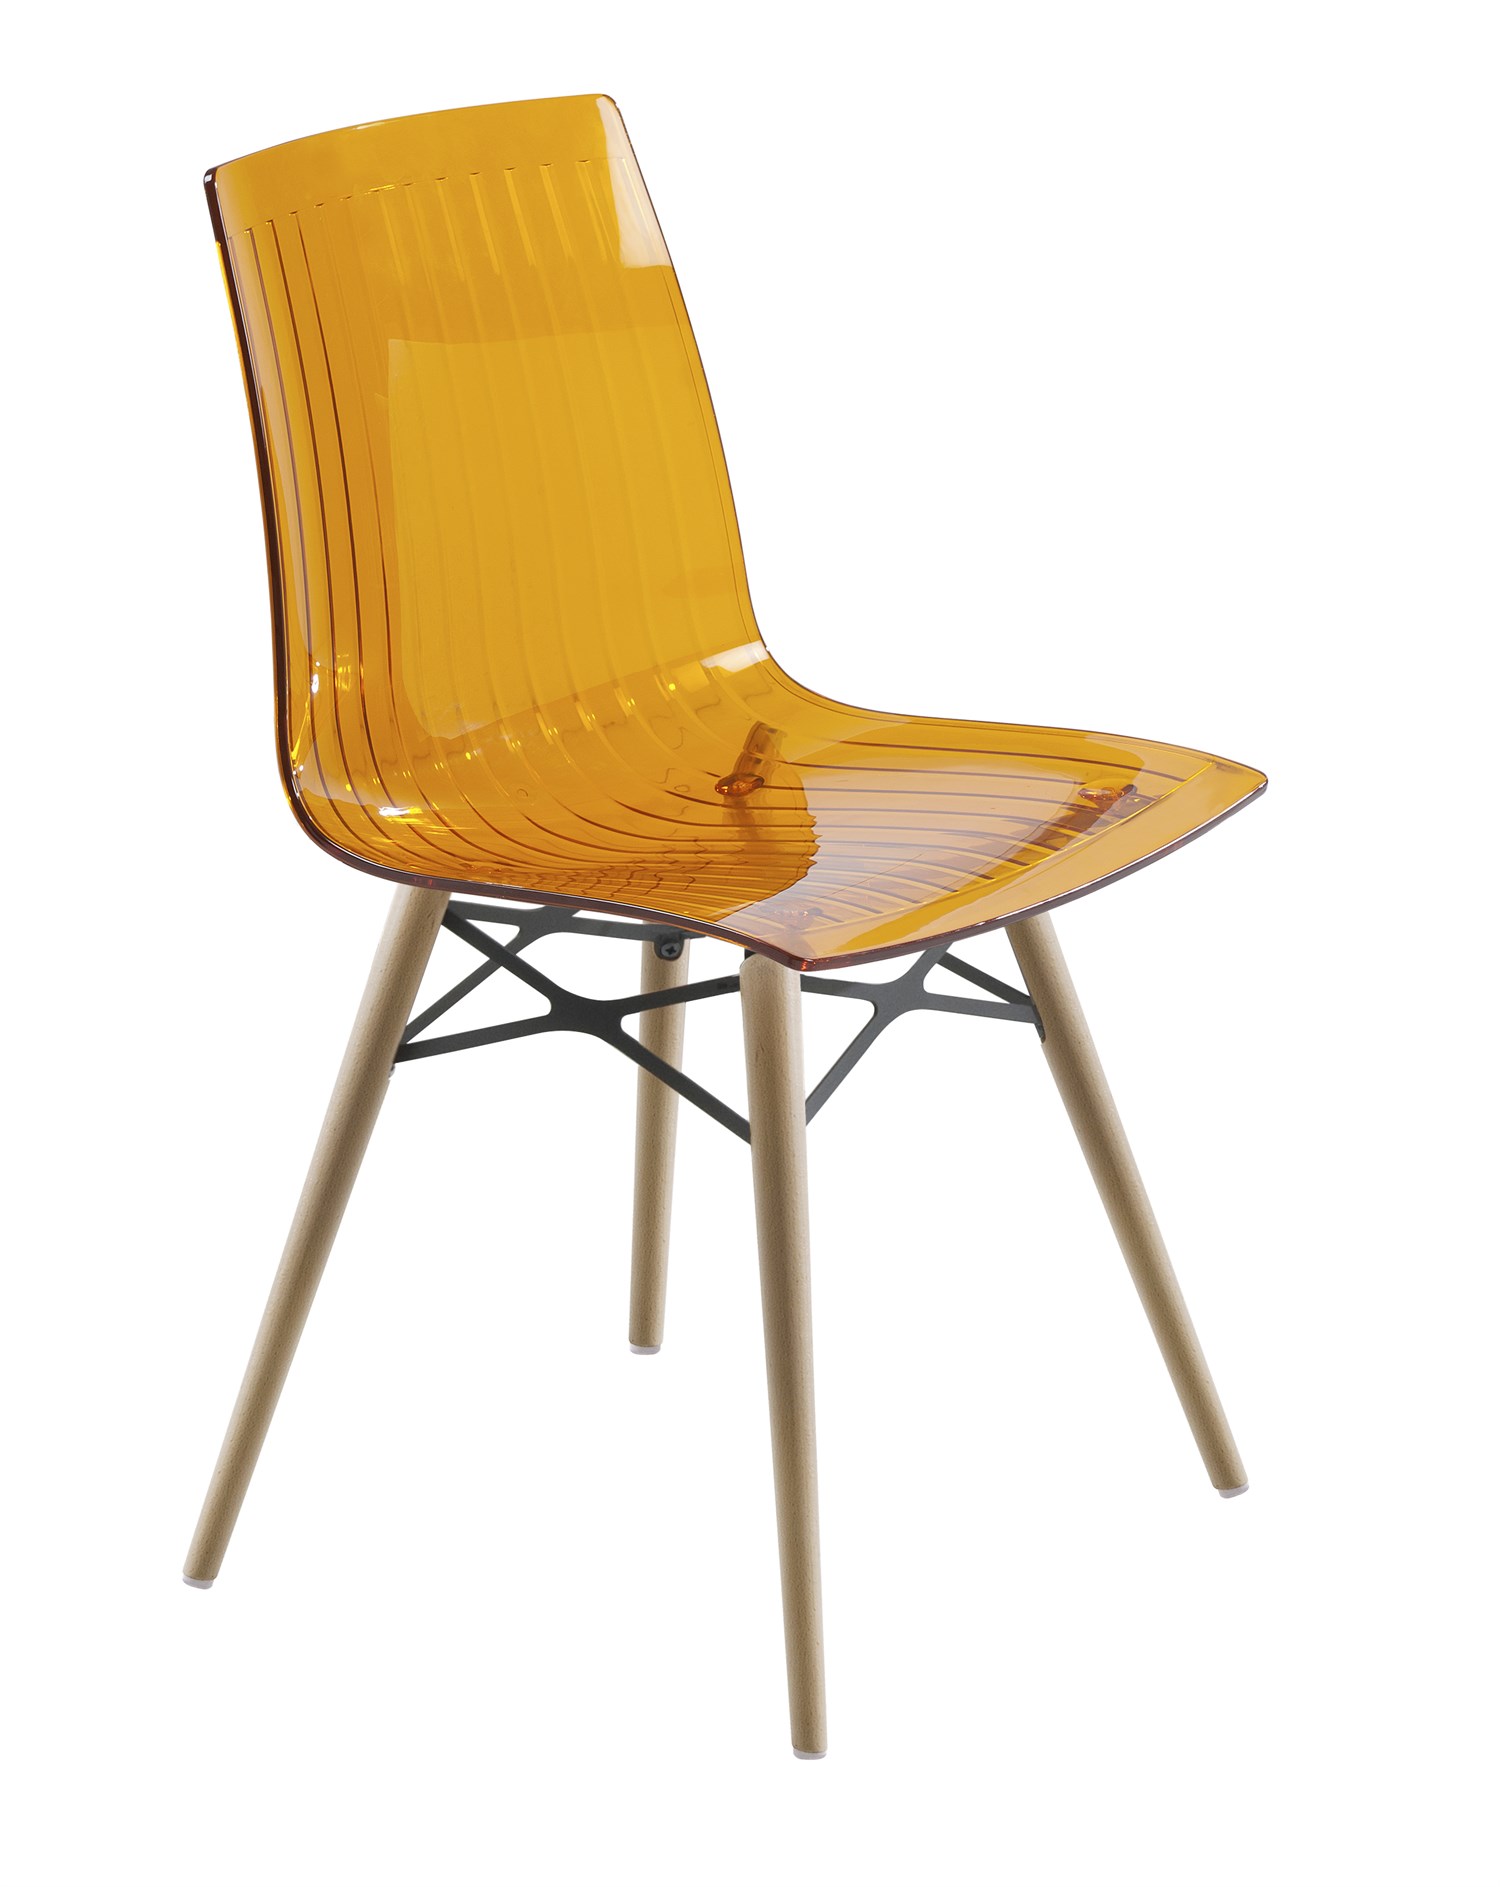 X-Treme - S Wox Sandalye (Kayın)